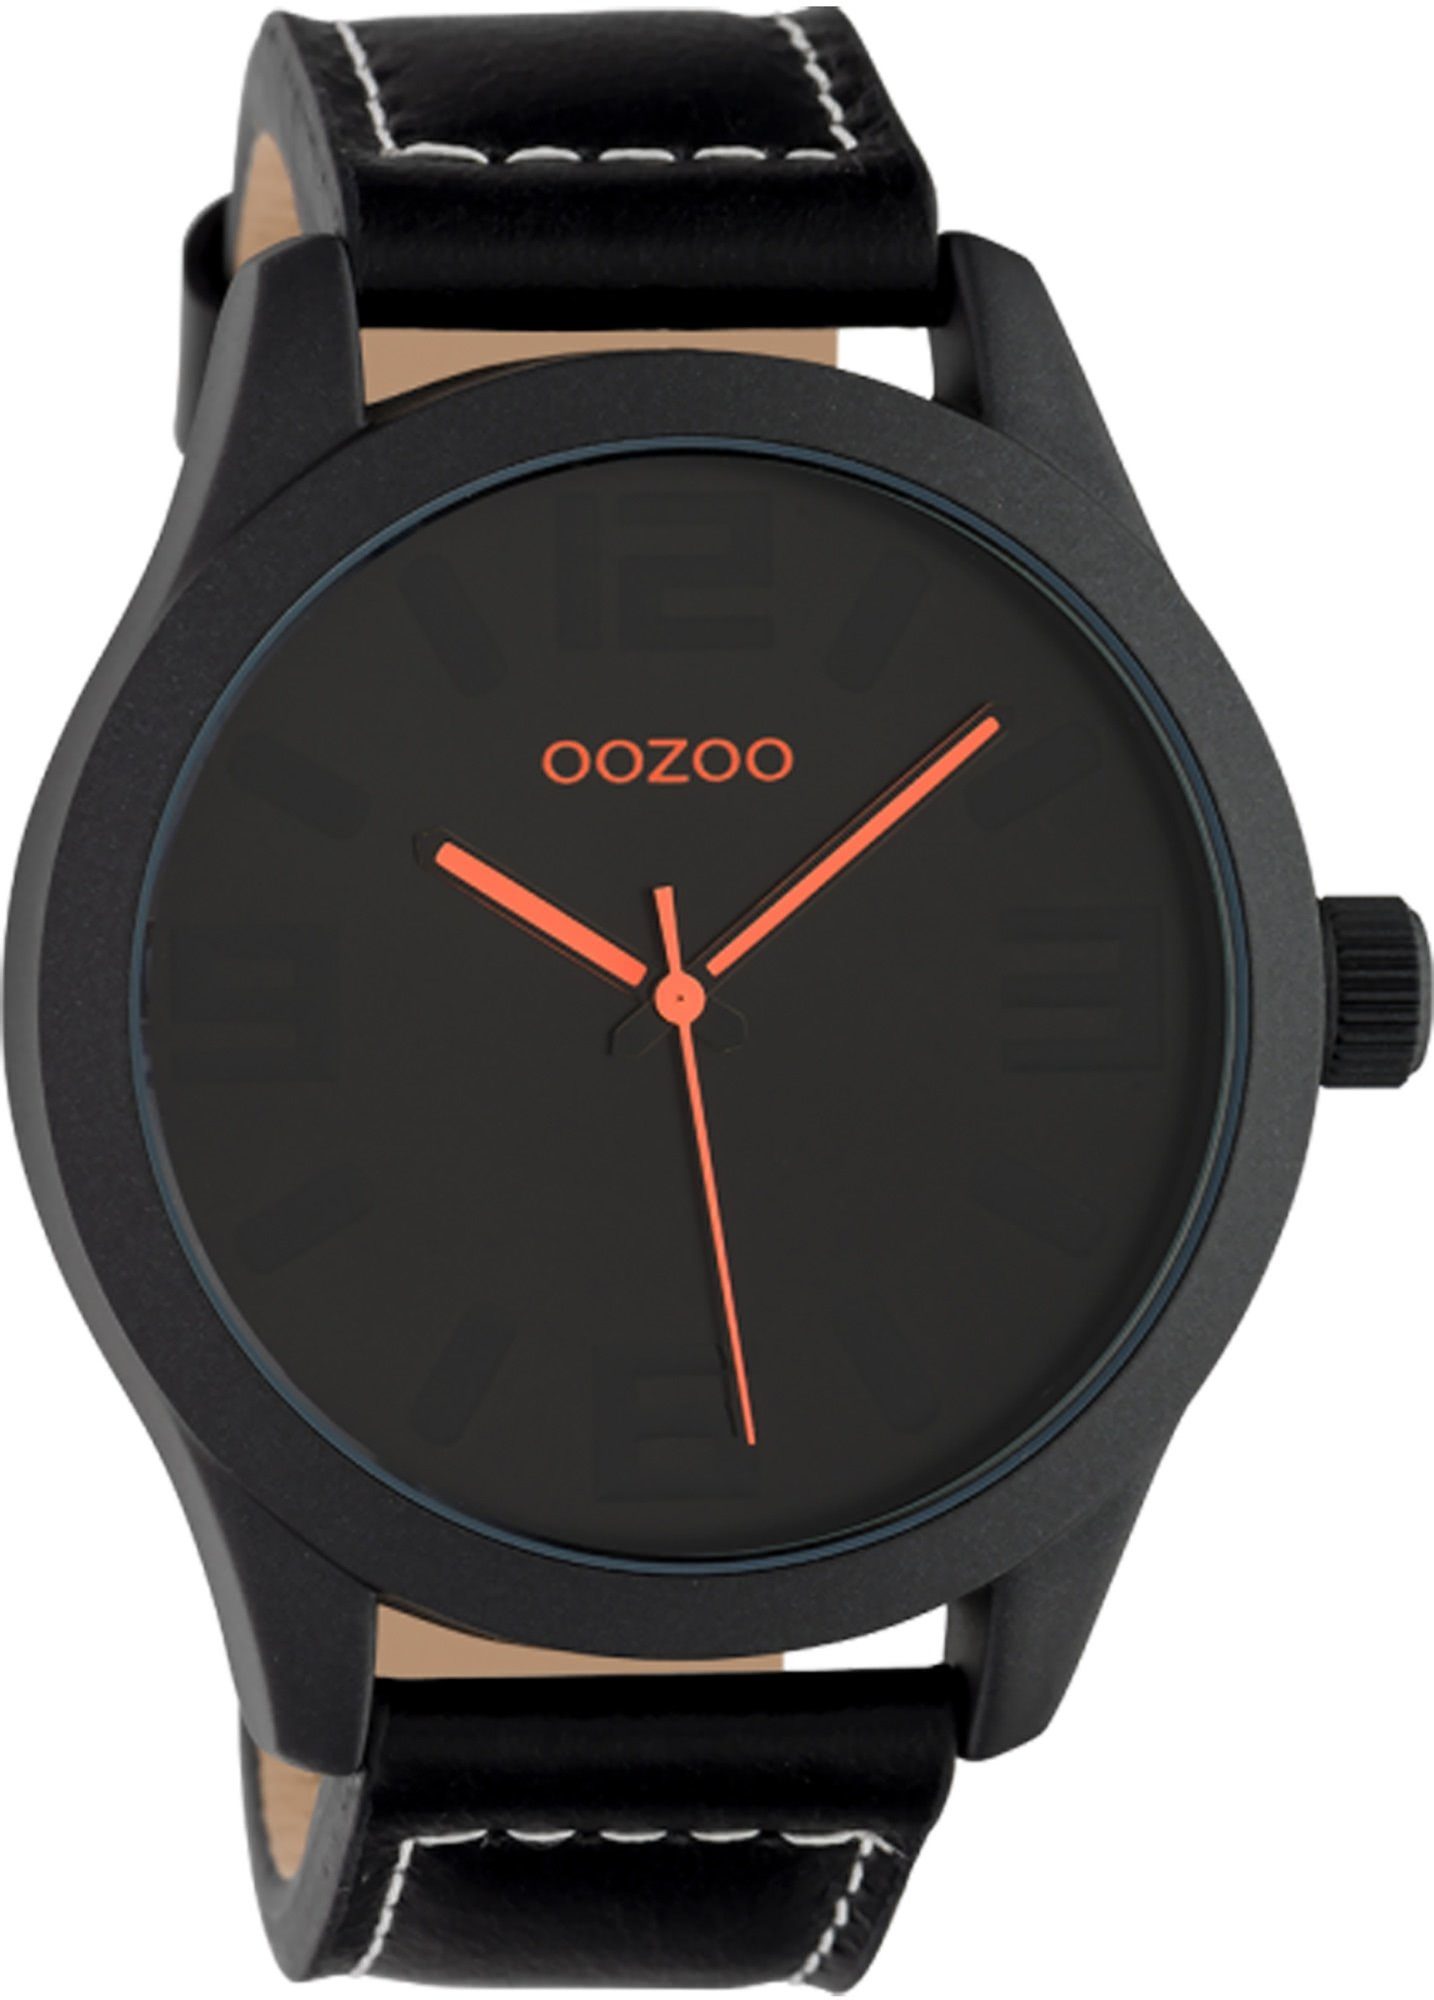 OOZOO Quarzuhr Oozoo Herren Armbanduhr schwarz Analog, Herrenuhr rund, extra groß (ca. 46mm) Lederarmband, Fashion-Style